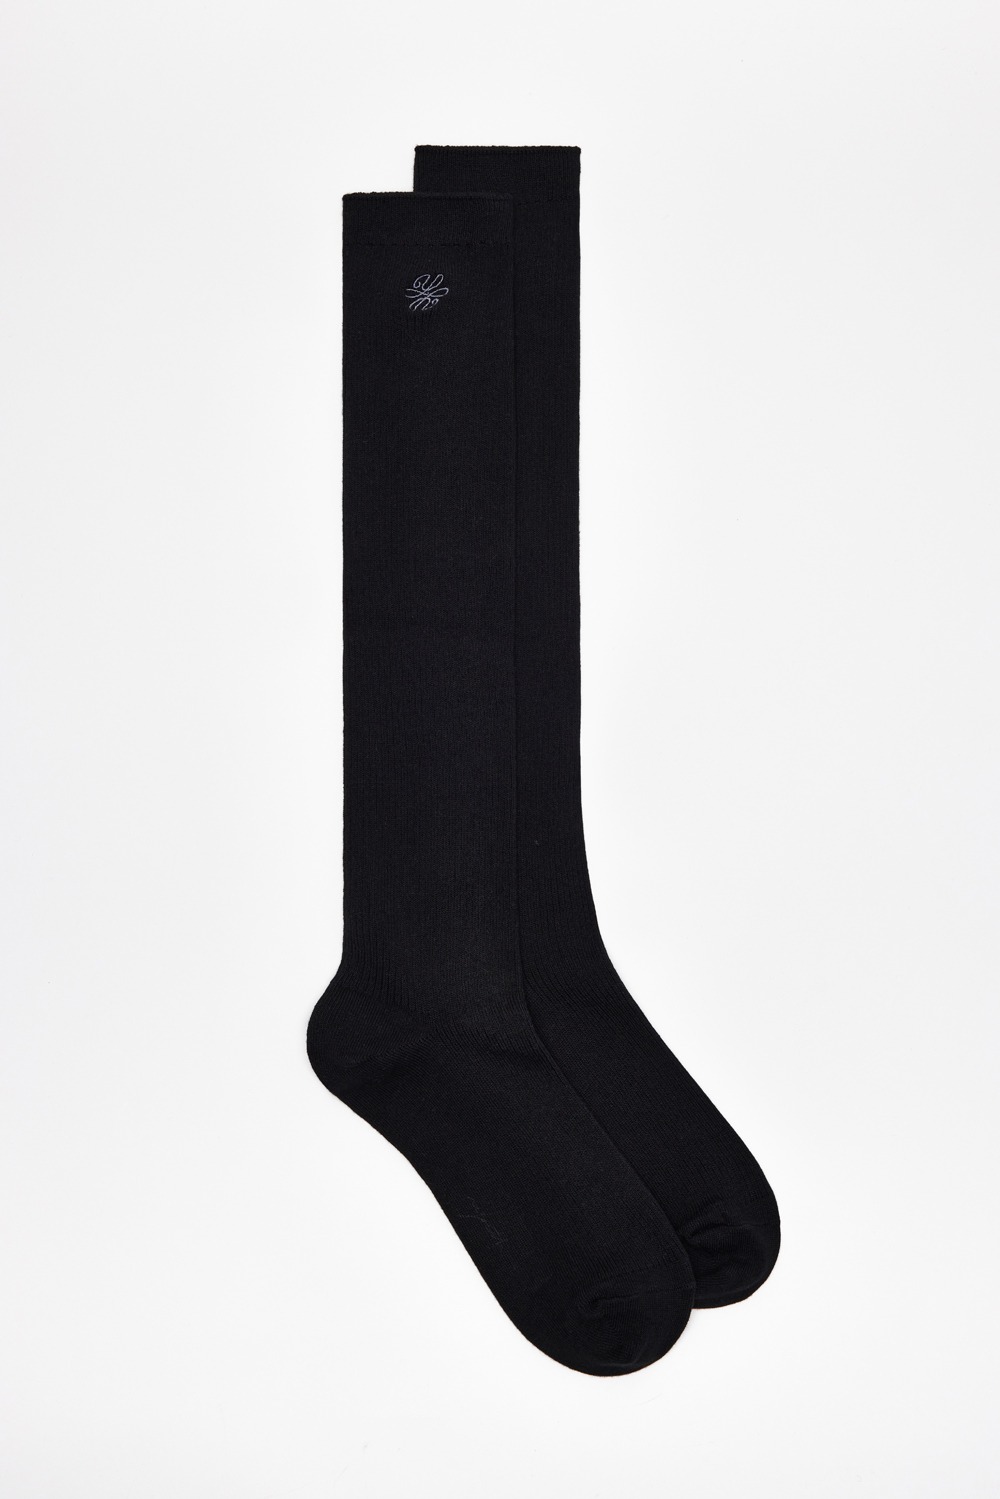 Essential Socks (Long)